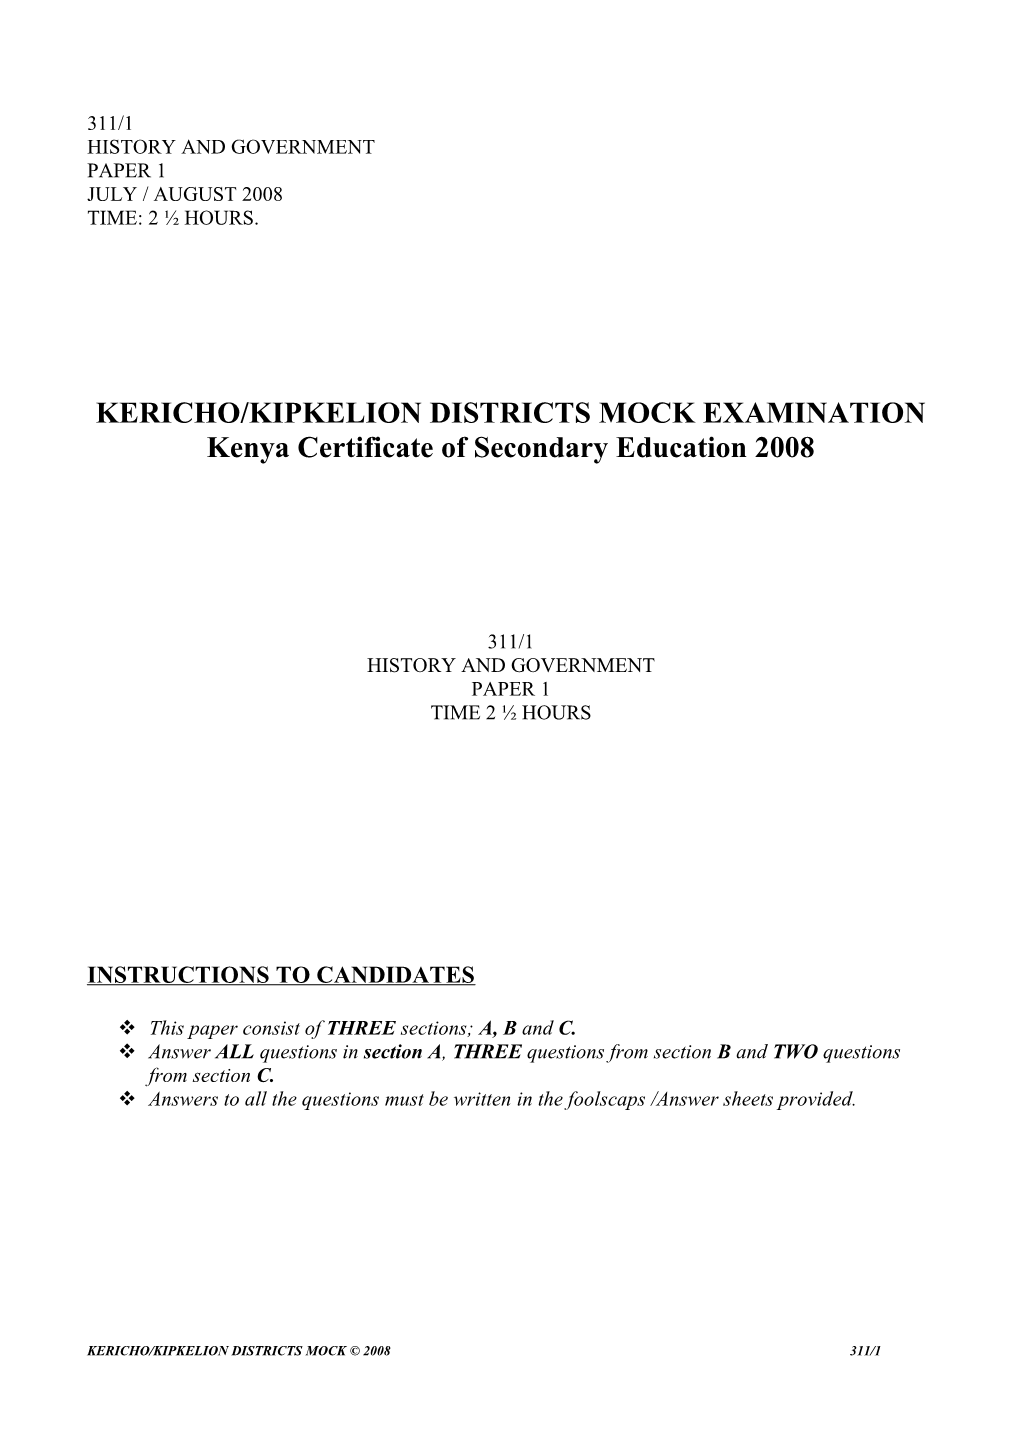 Kericho/Kipkelion Districts Mock Examination